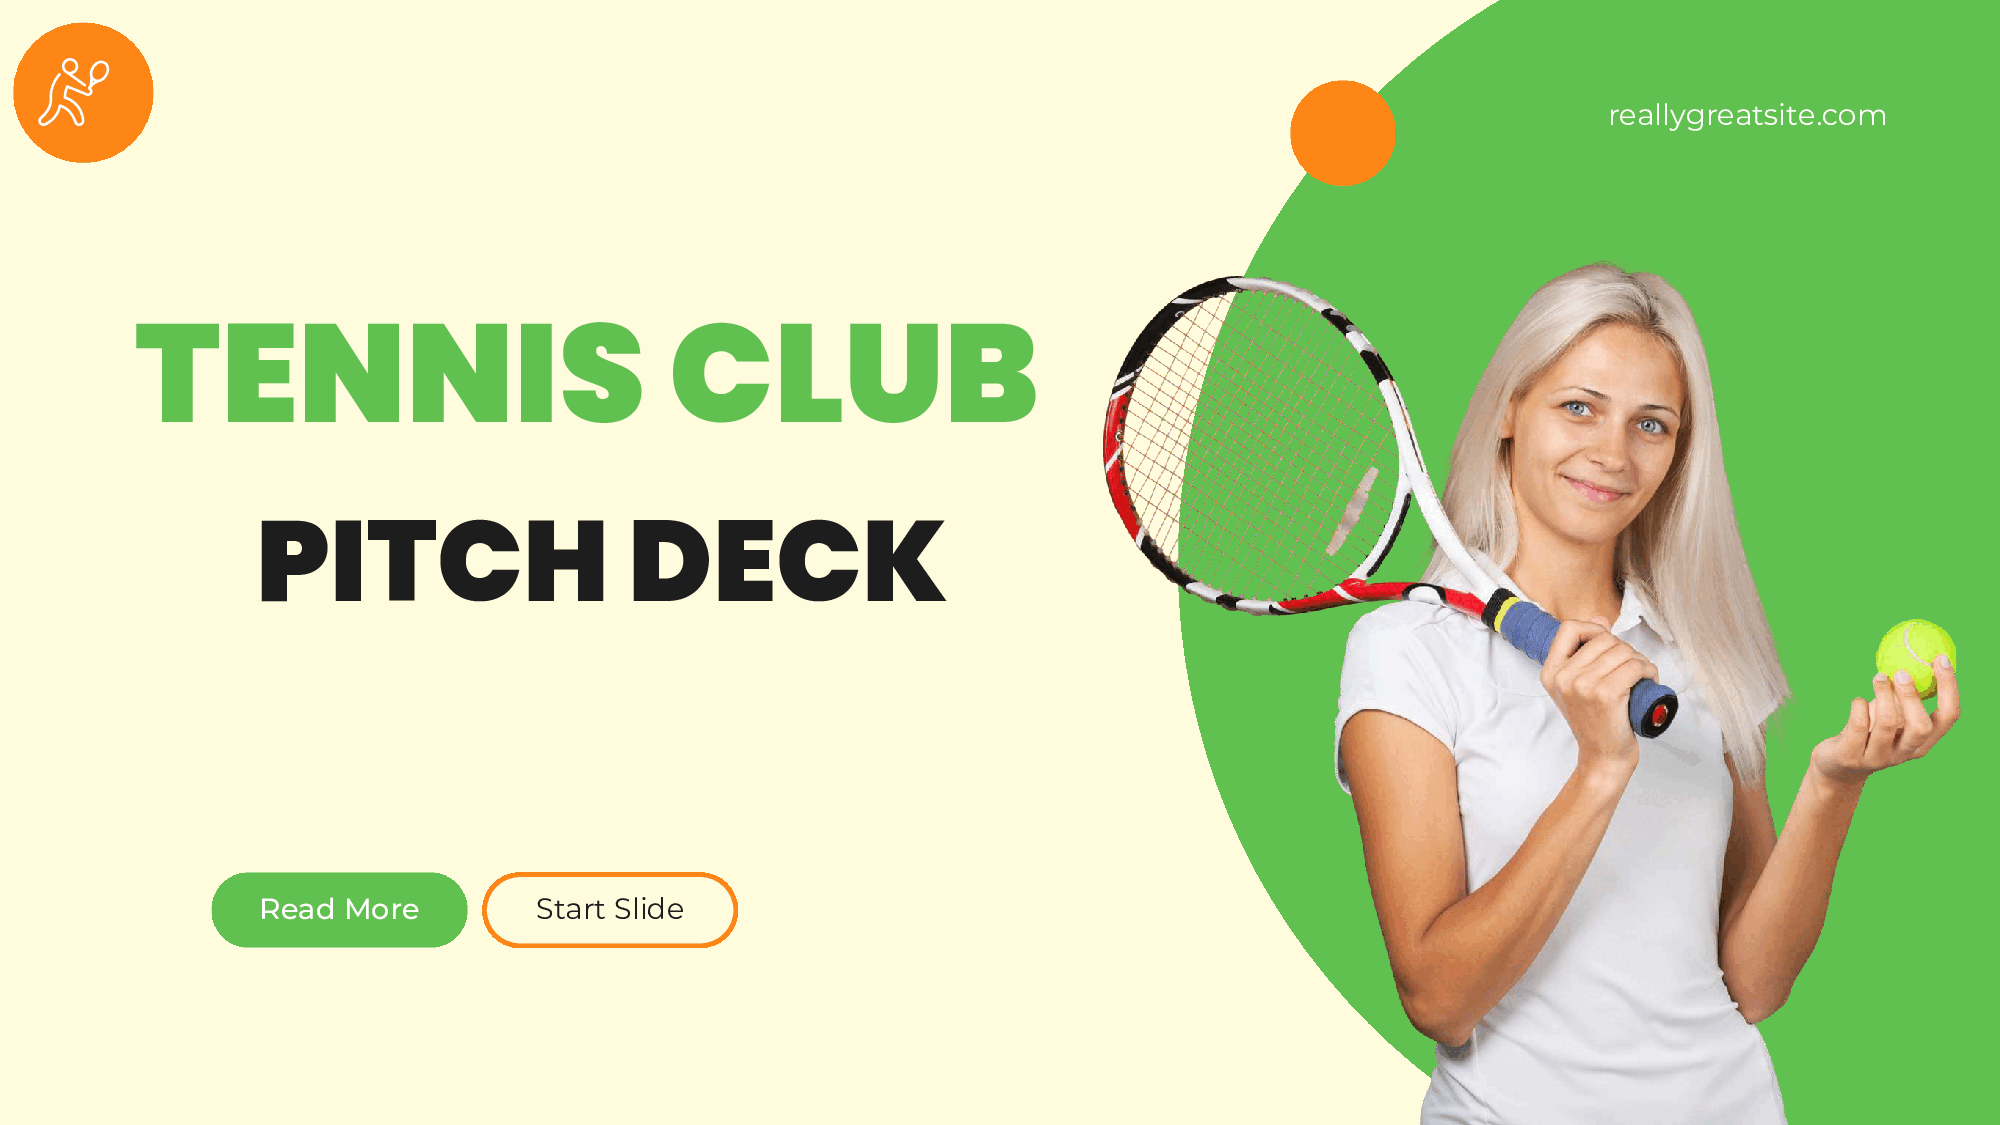 Tennis Club Pitch Deck Template